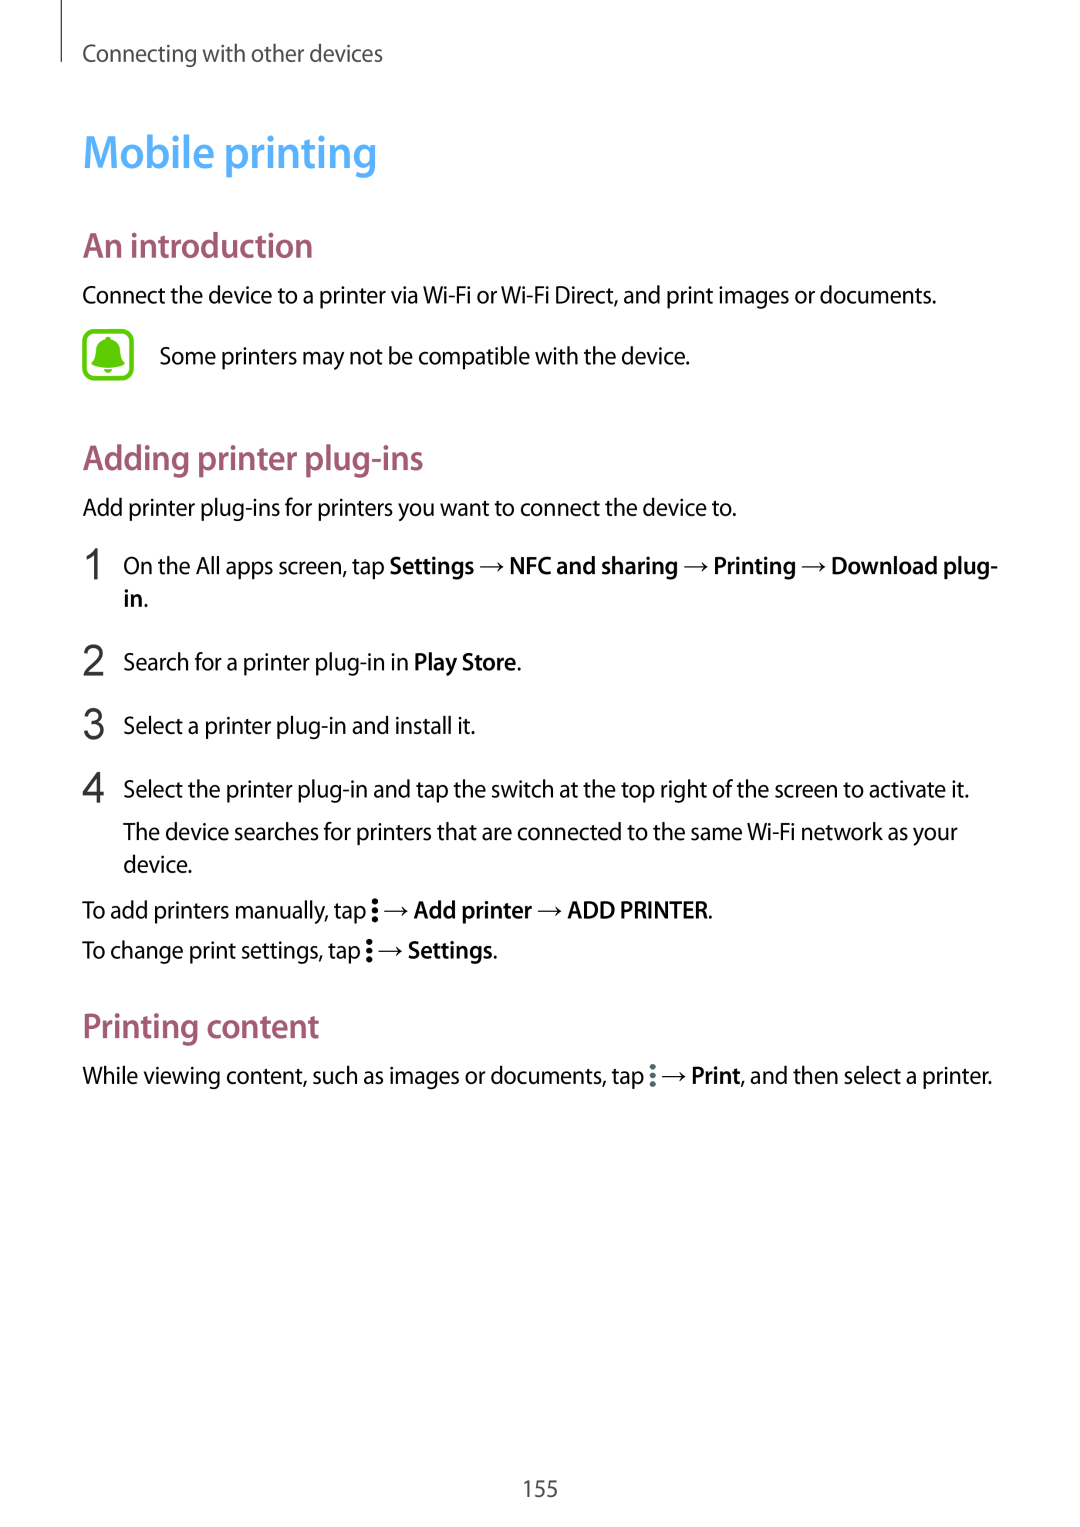 Samsung SM-N915FZWYEUR, SM-N915FZKYATO manual Mobile printing, Adding printer plug-ins, Printing content, An introduction 